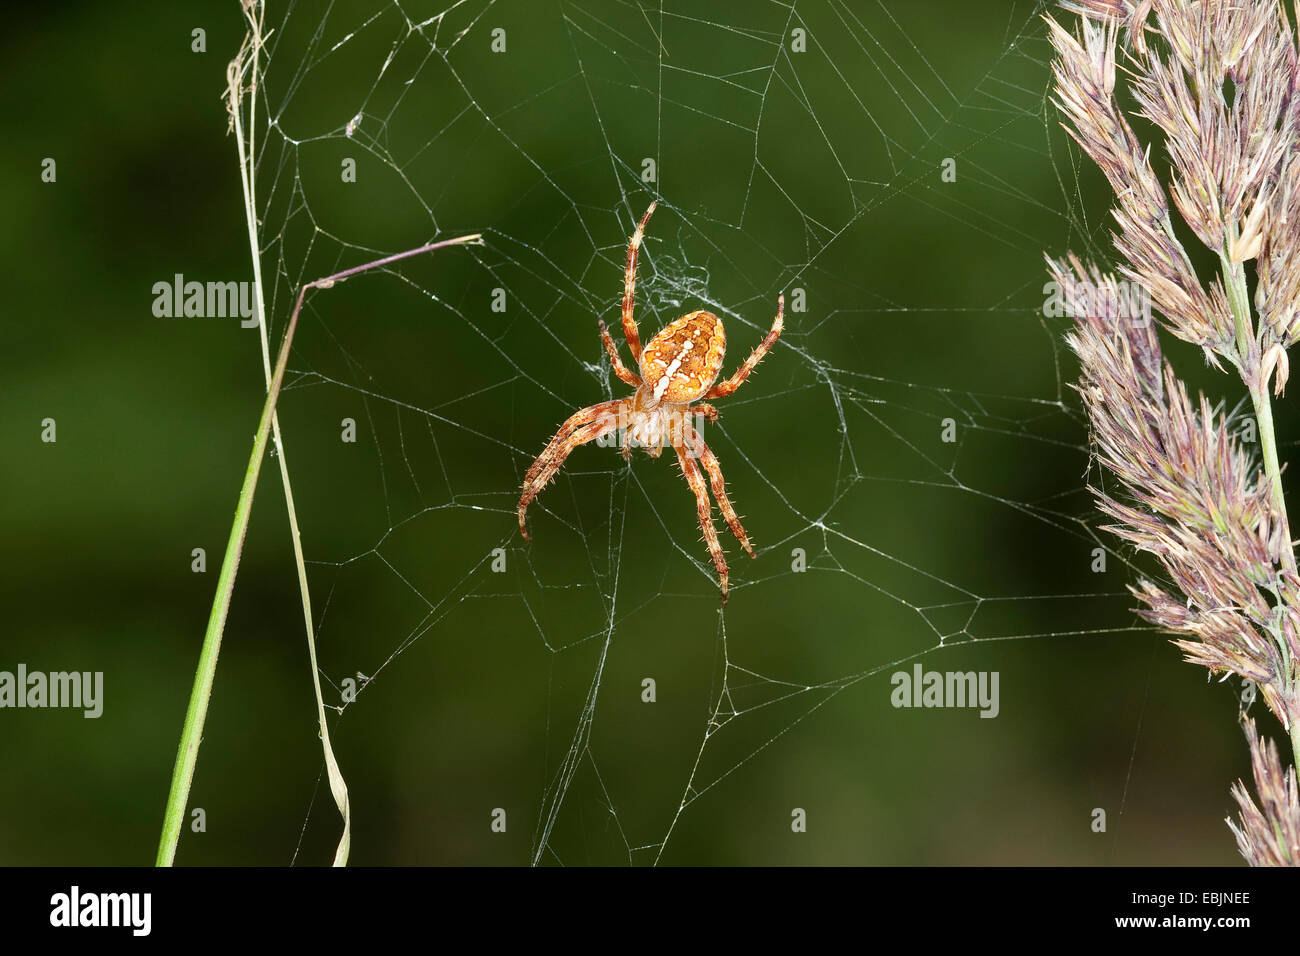 cross orbweaver, European garden spider, cross spider (Araneus diadematus), lying in wait in its web among blades of grass, Germany Stock Photo